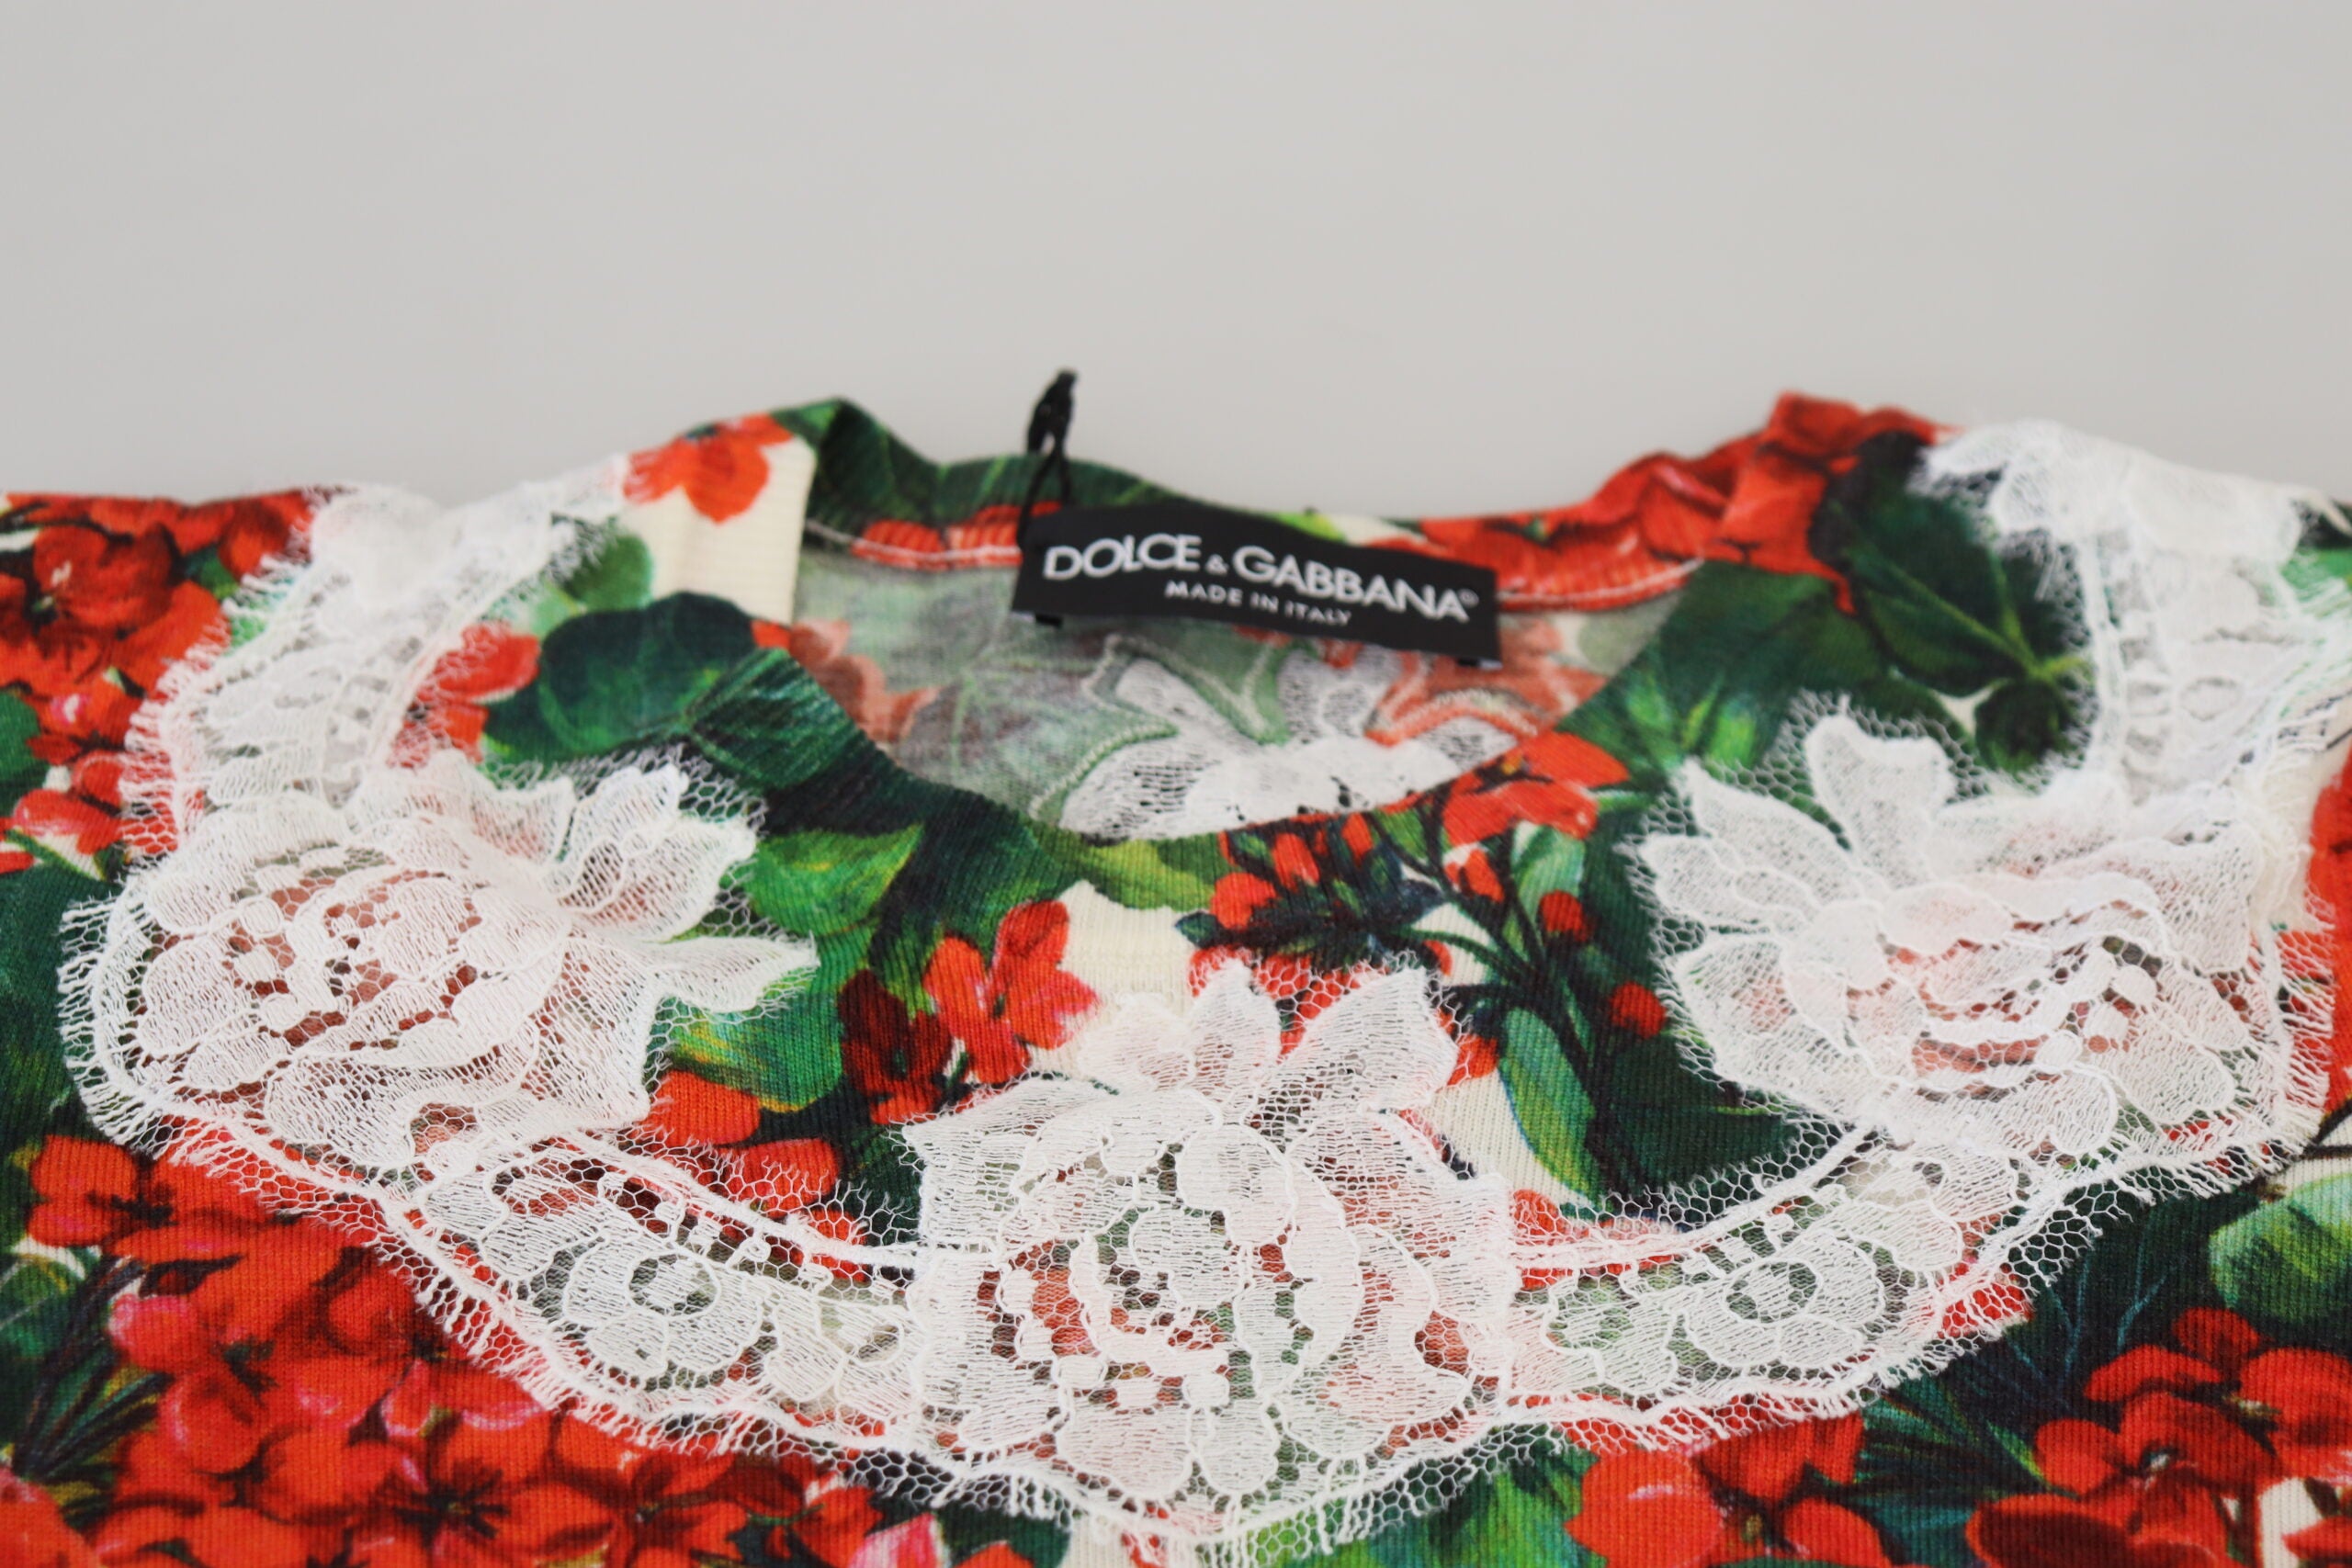 Dolce & Gabbana Chic Floral Print Tank Top Vest